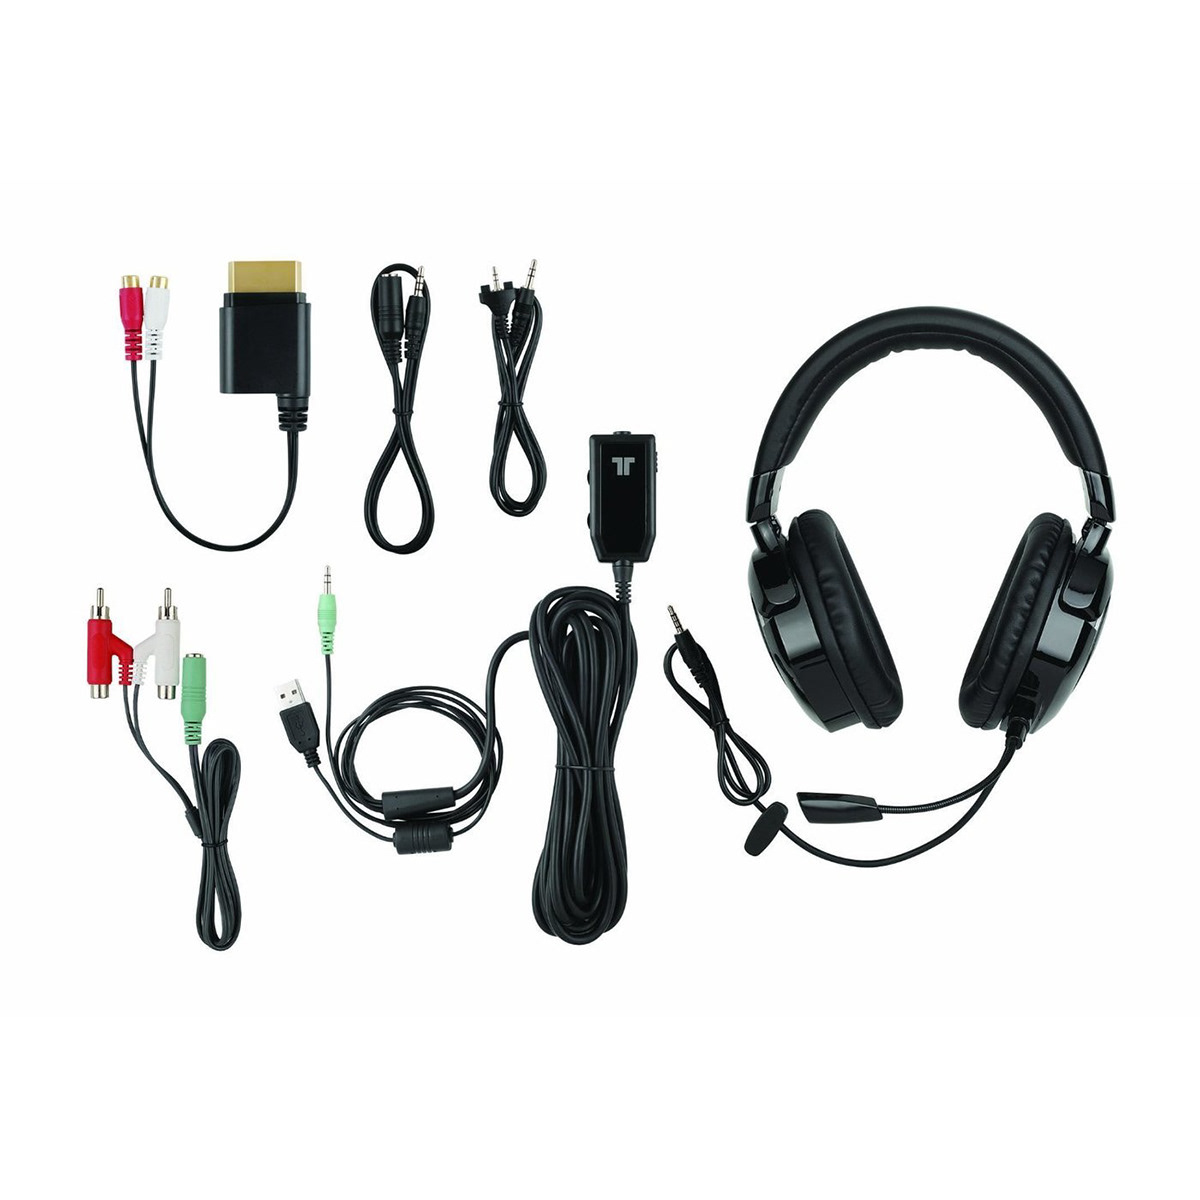 tritton AX-120 Audio controller design Gaming headset Performance xbox xbox360